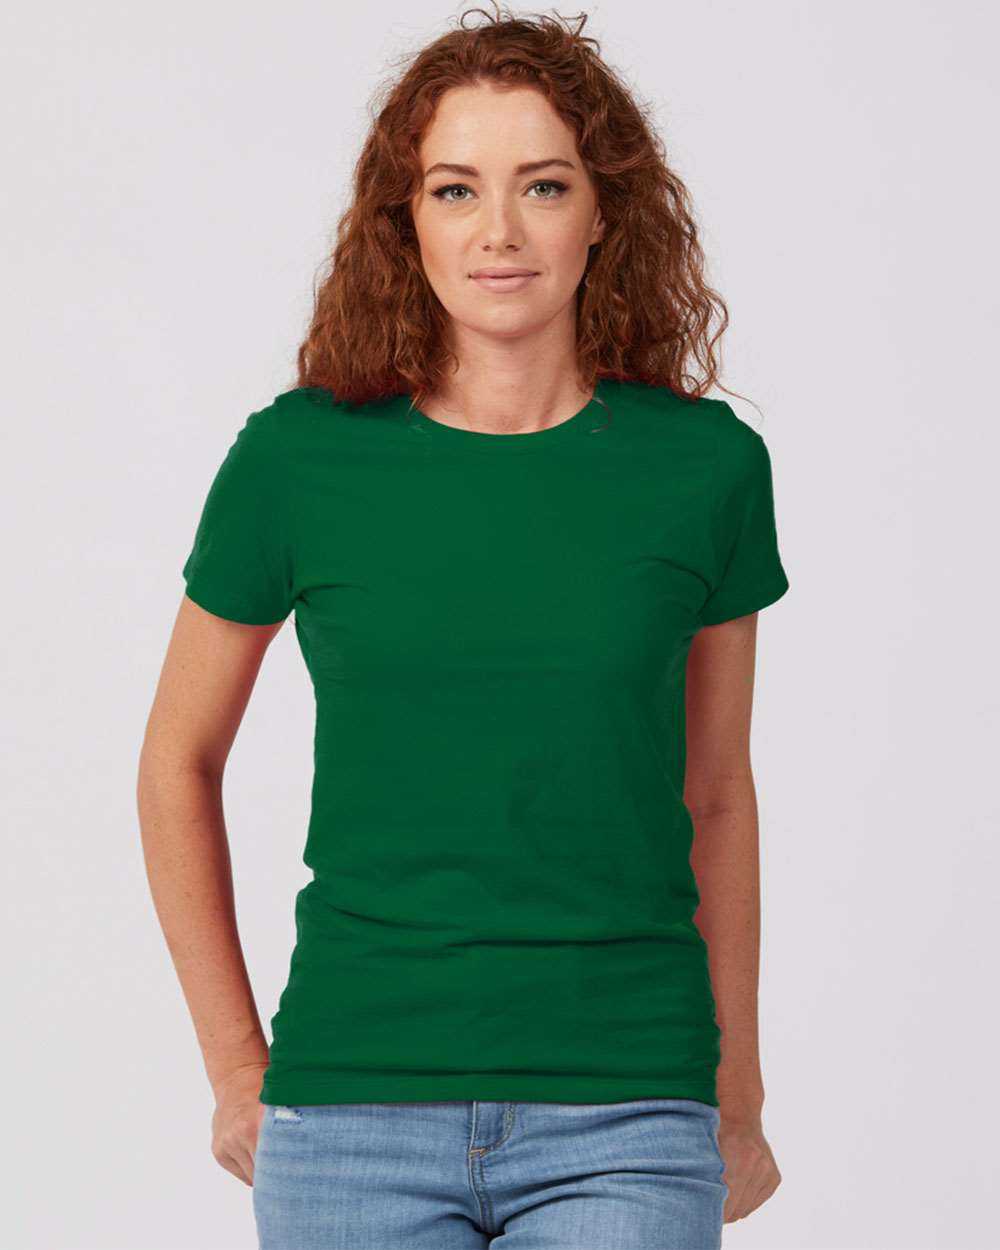 Tultex 516 Women's Premium Cotton T-Shirt - Kelly - HIT a Double